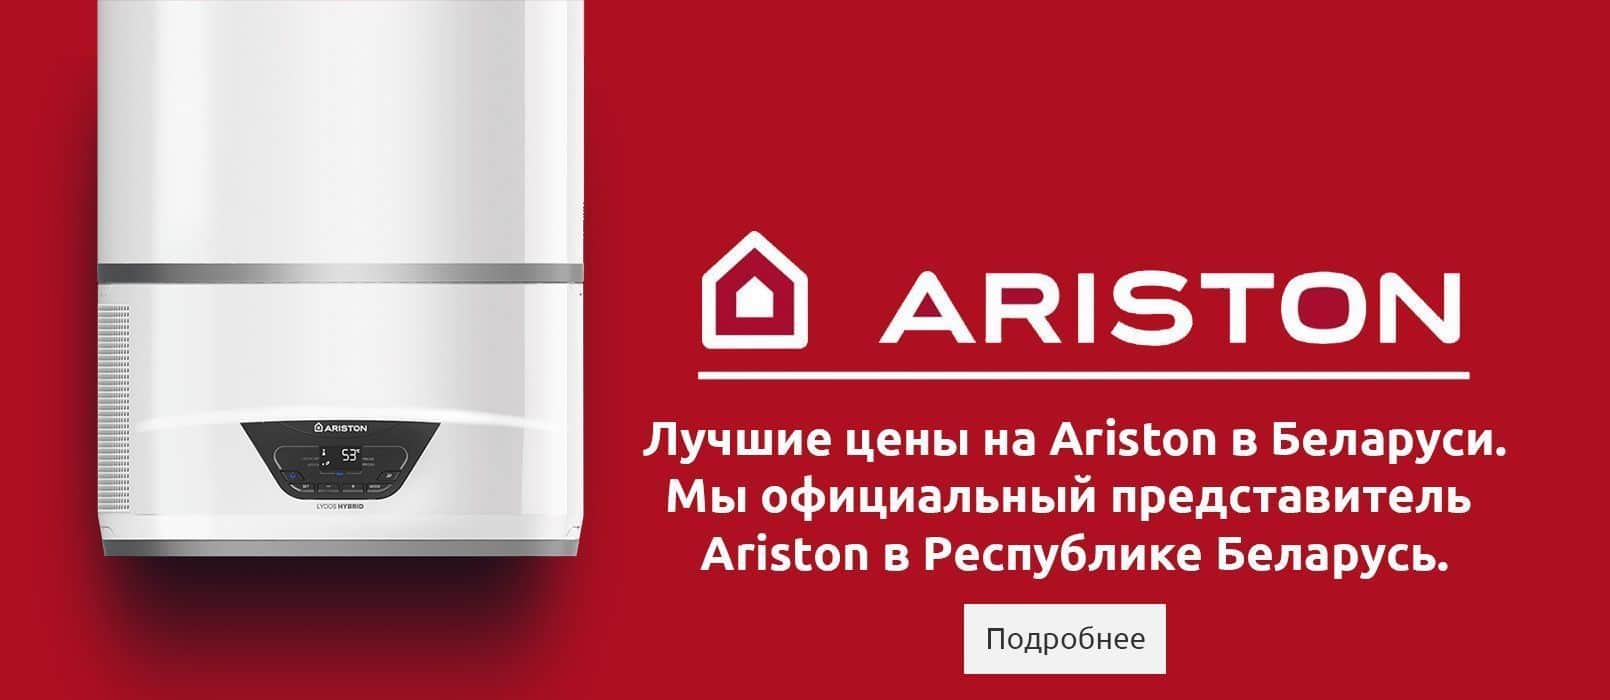 Аристон воронеж купить. Ariston водонагреватель reklama banner. Реклама Аристон. Котлы Аристон реклама. Ariston водонагреватели реклама.